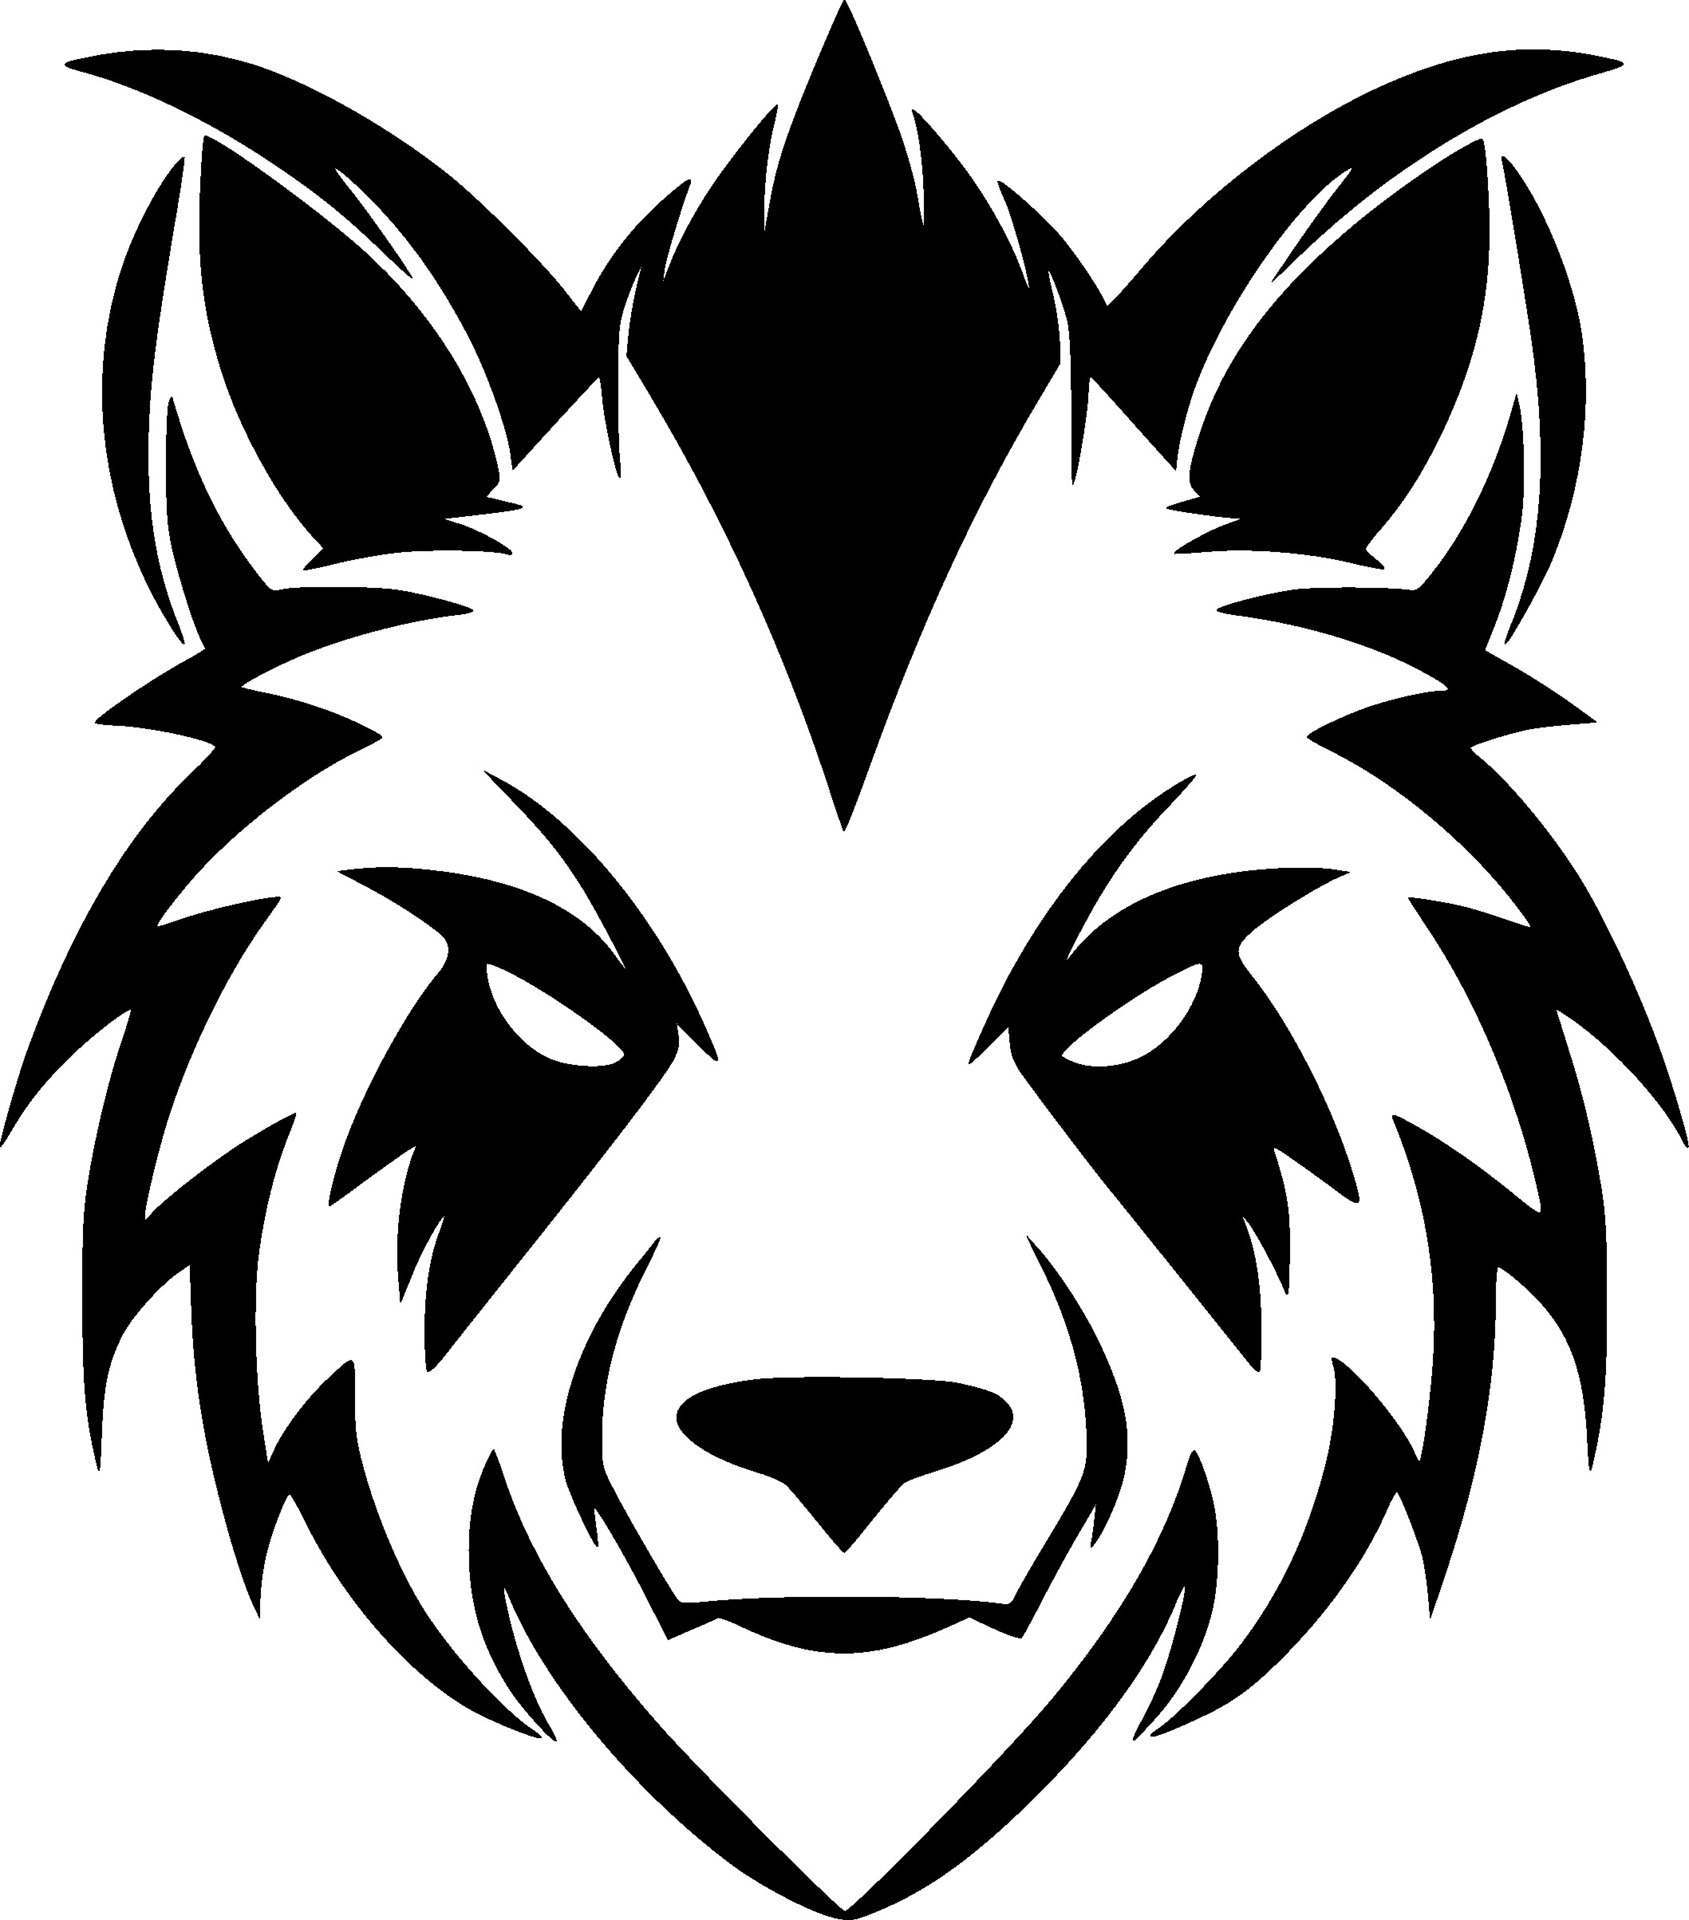 Panda - Minimalist and Flat Logo - Vector illustration 26736043 Vector ...